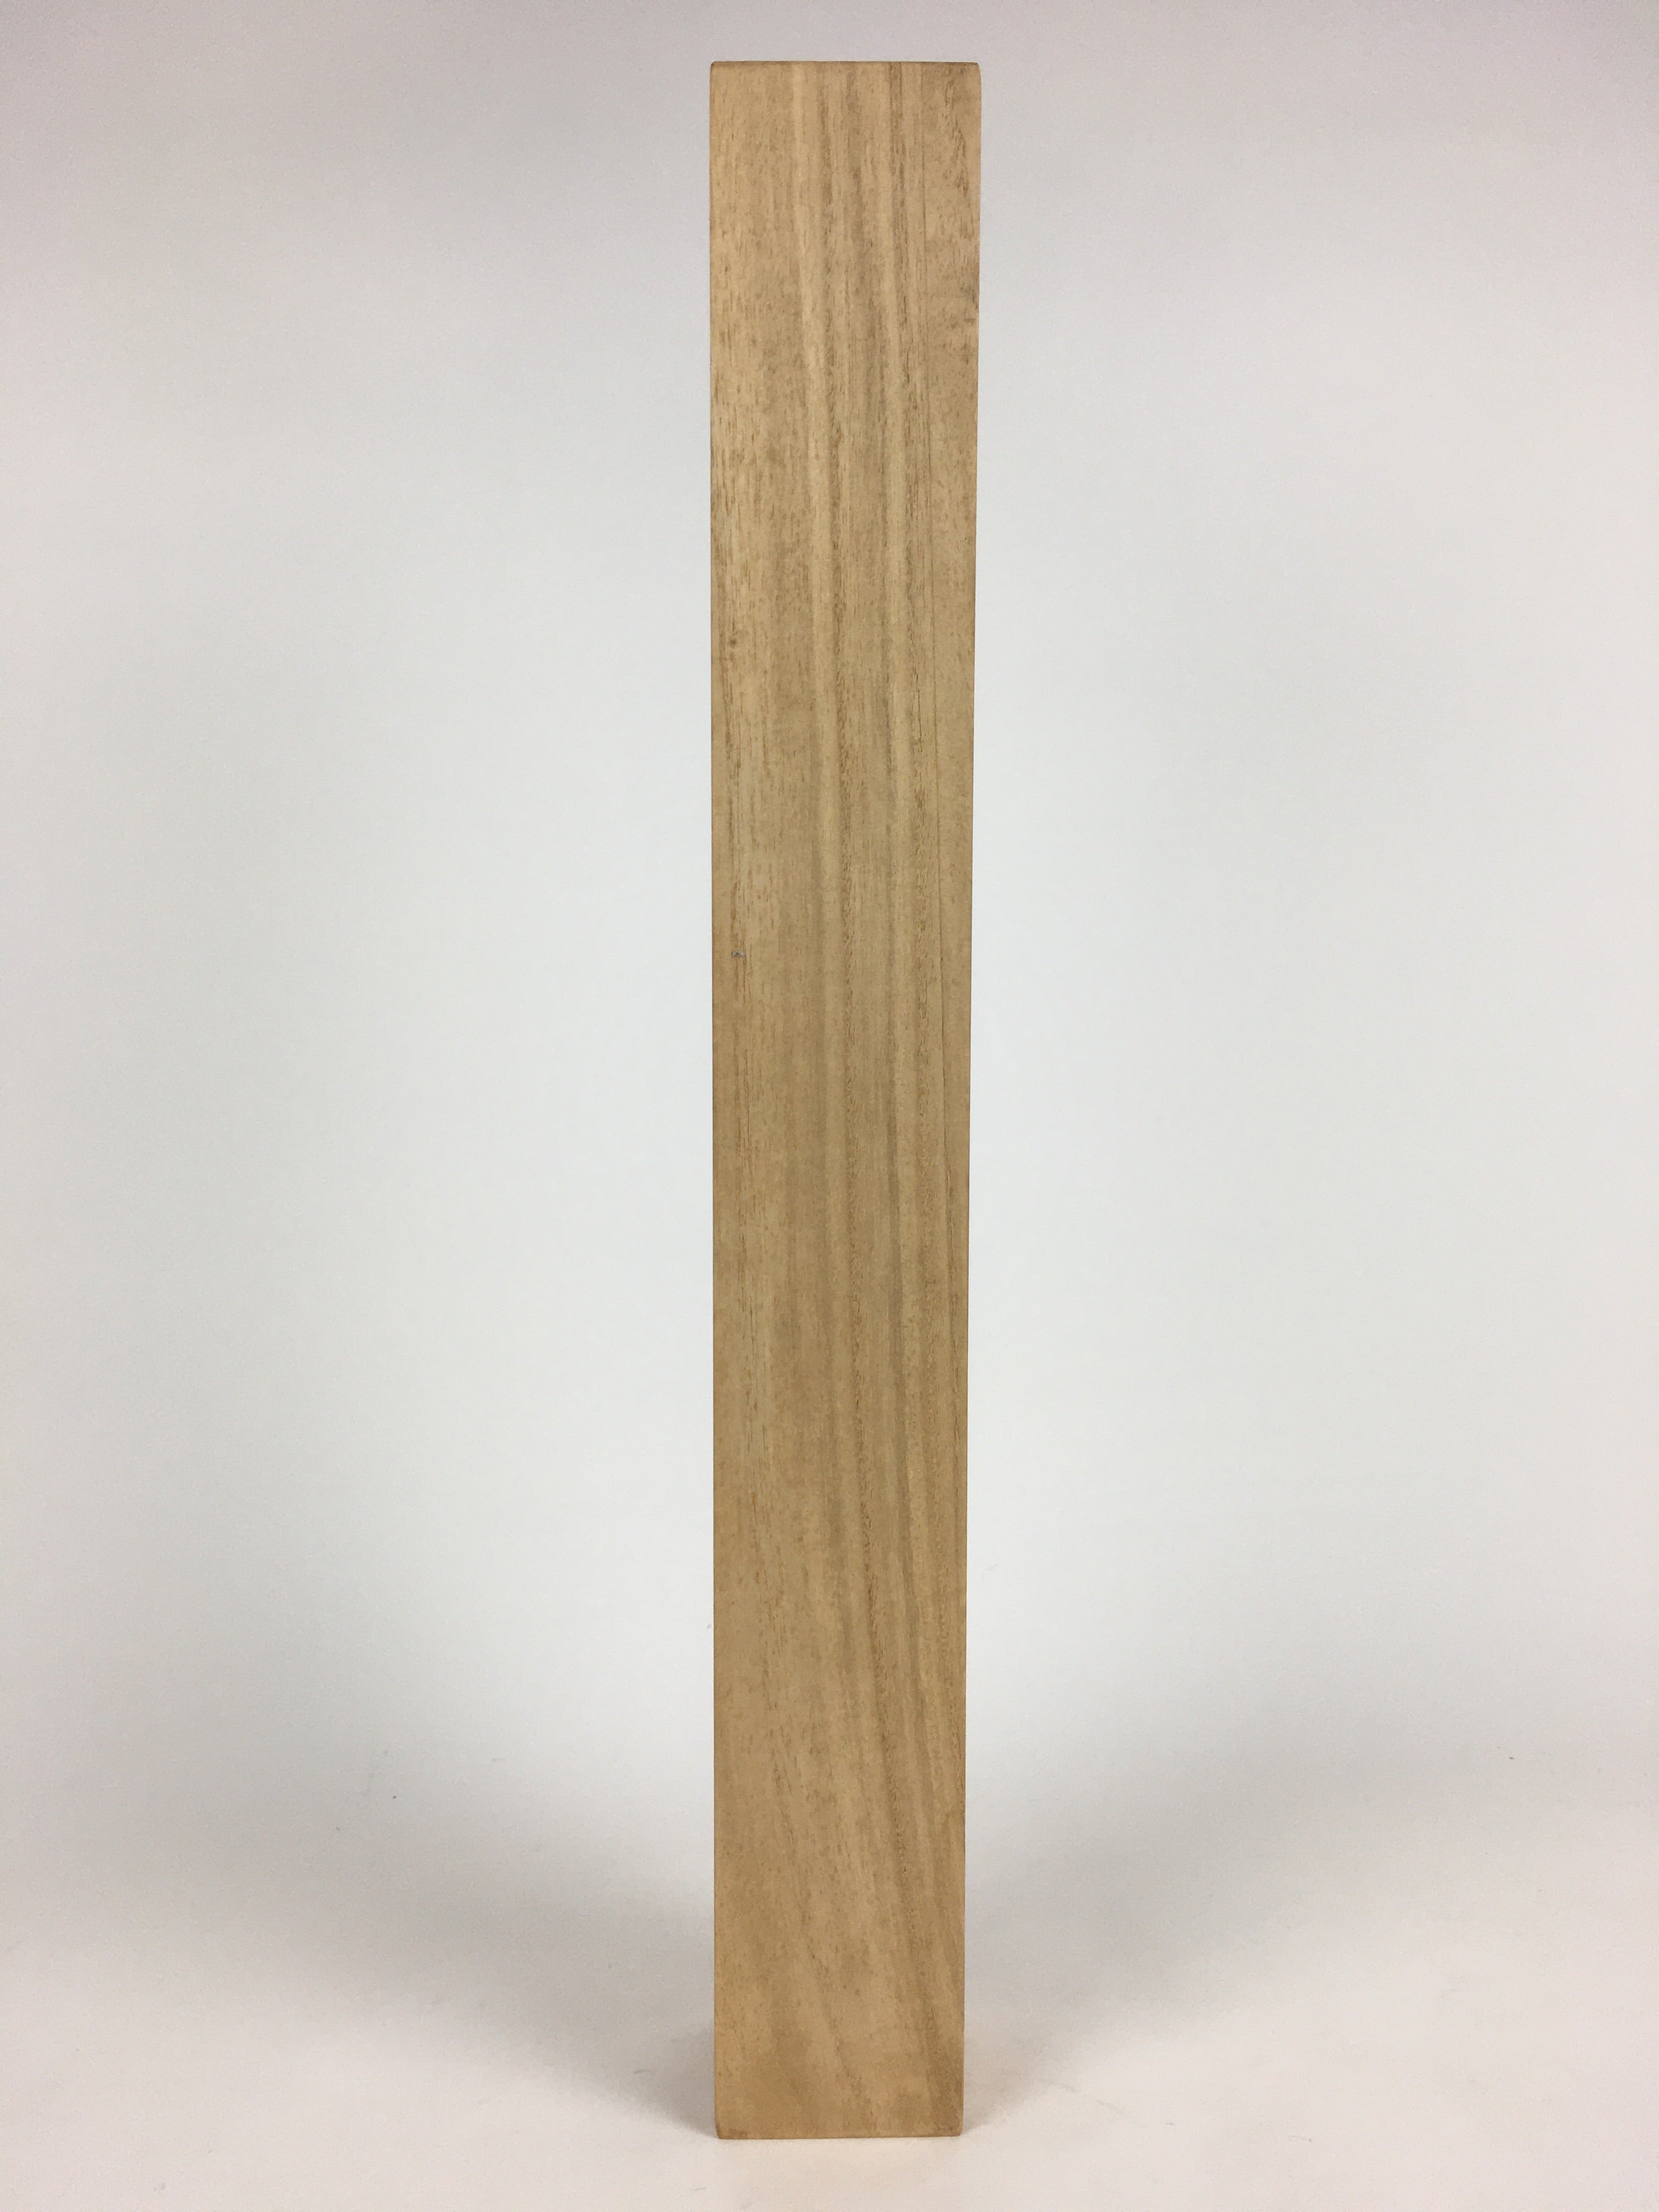 Japanese Wooden Hanging Scroll Box Kakejiku Hako Inside Length 60.5cm SB199